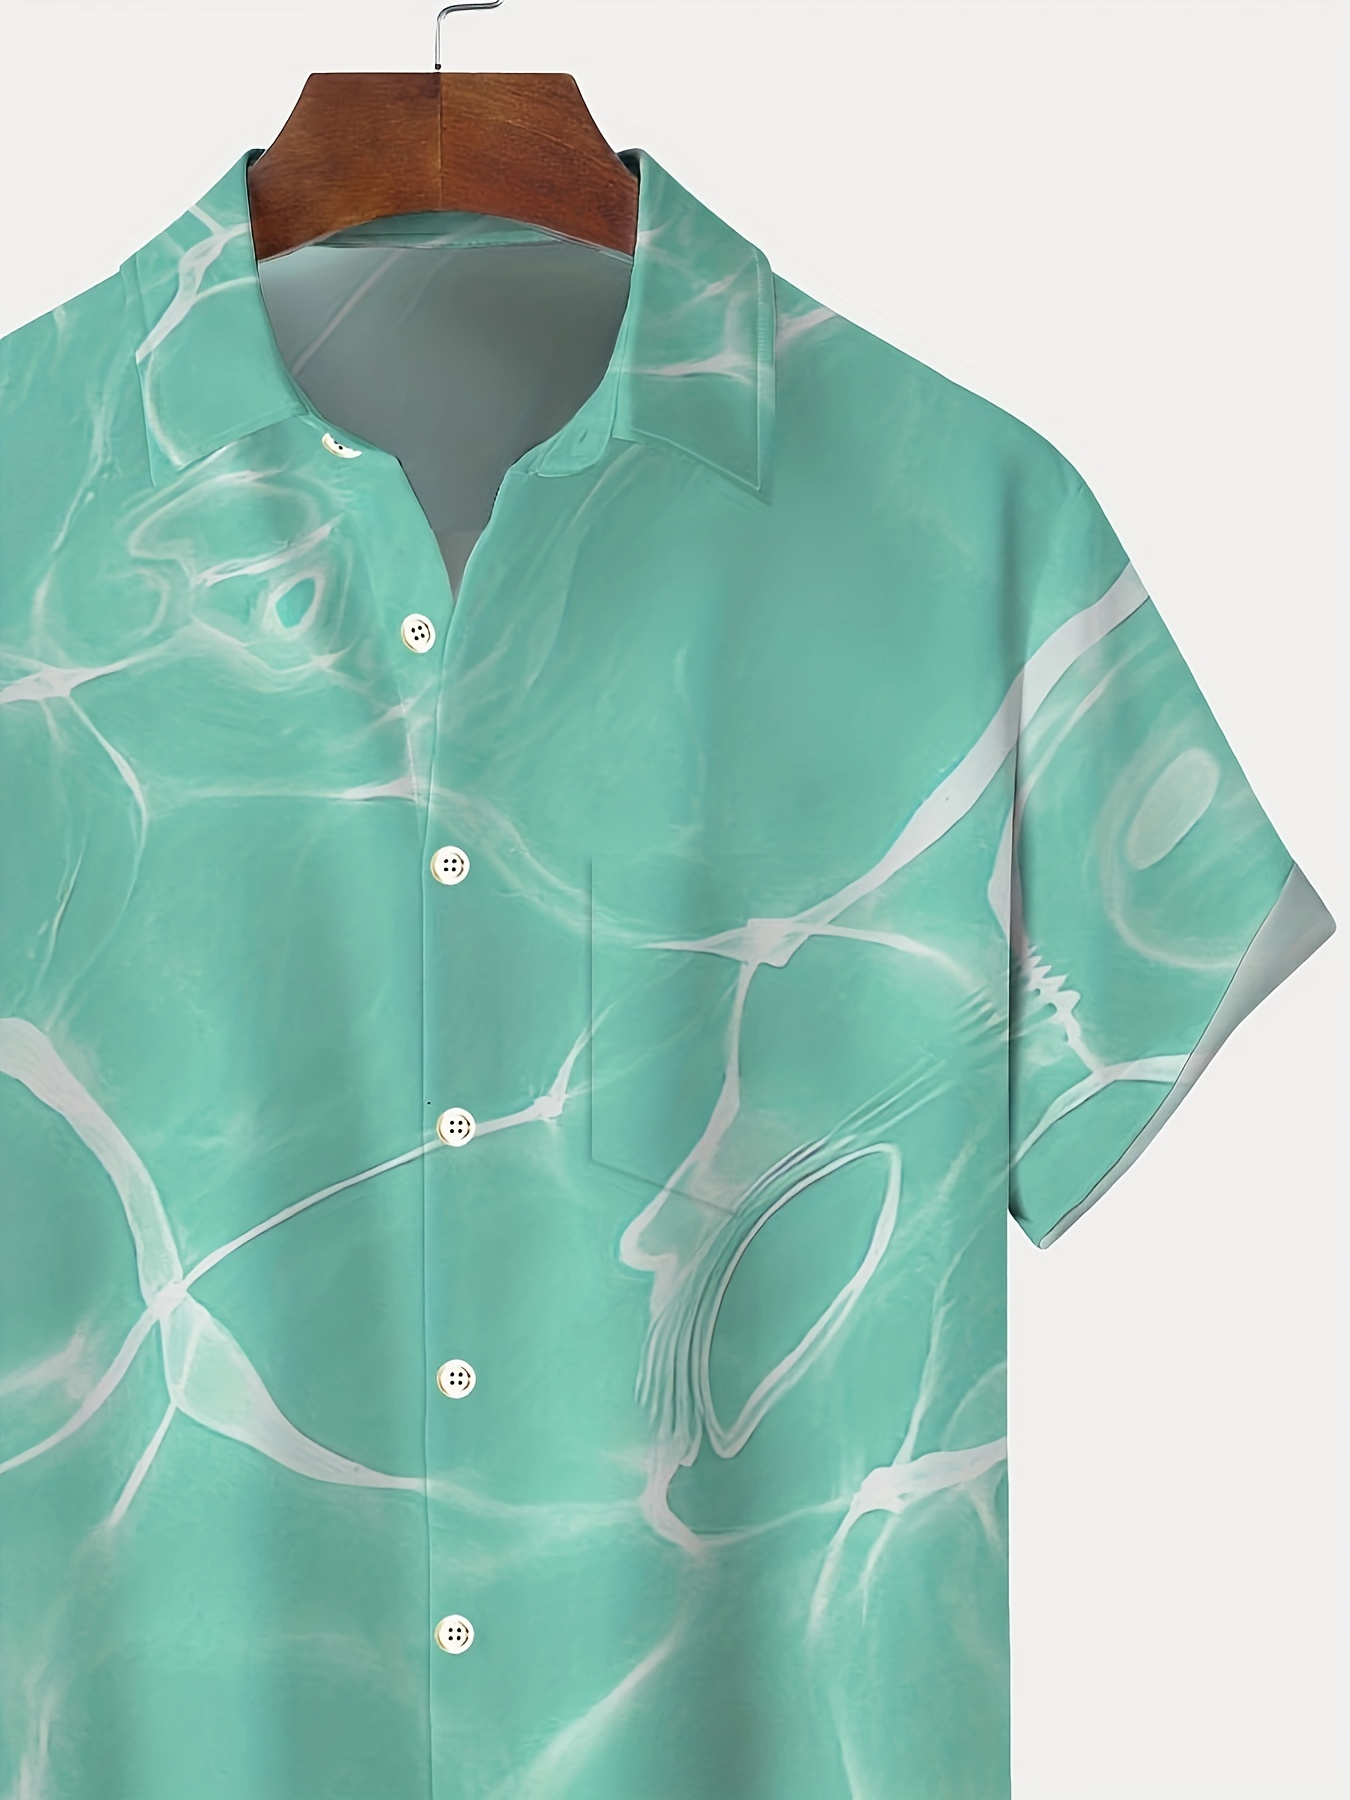 hawaiian water ripple print mens casual short sleeve shirt mens shirt for summer vacation resort tops for men gift for men details 5